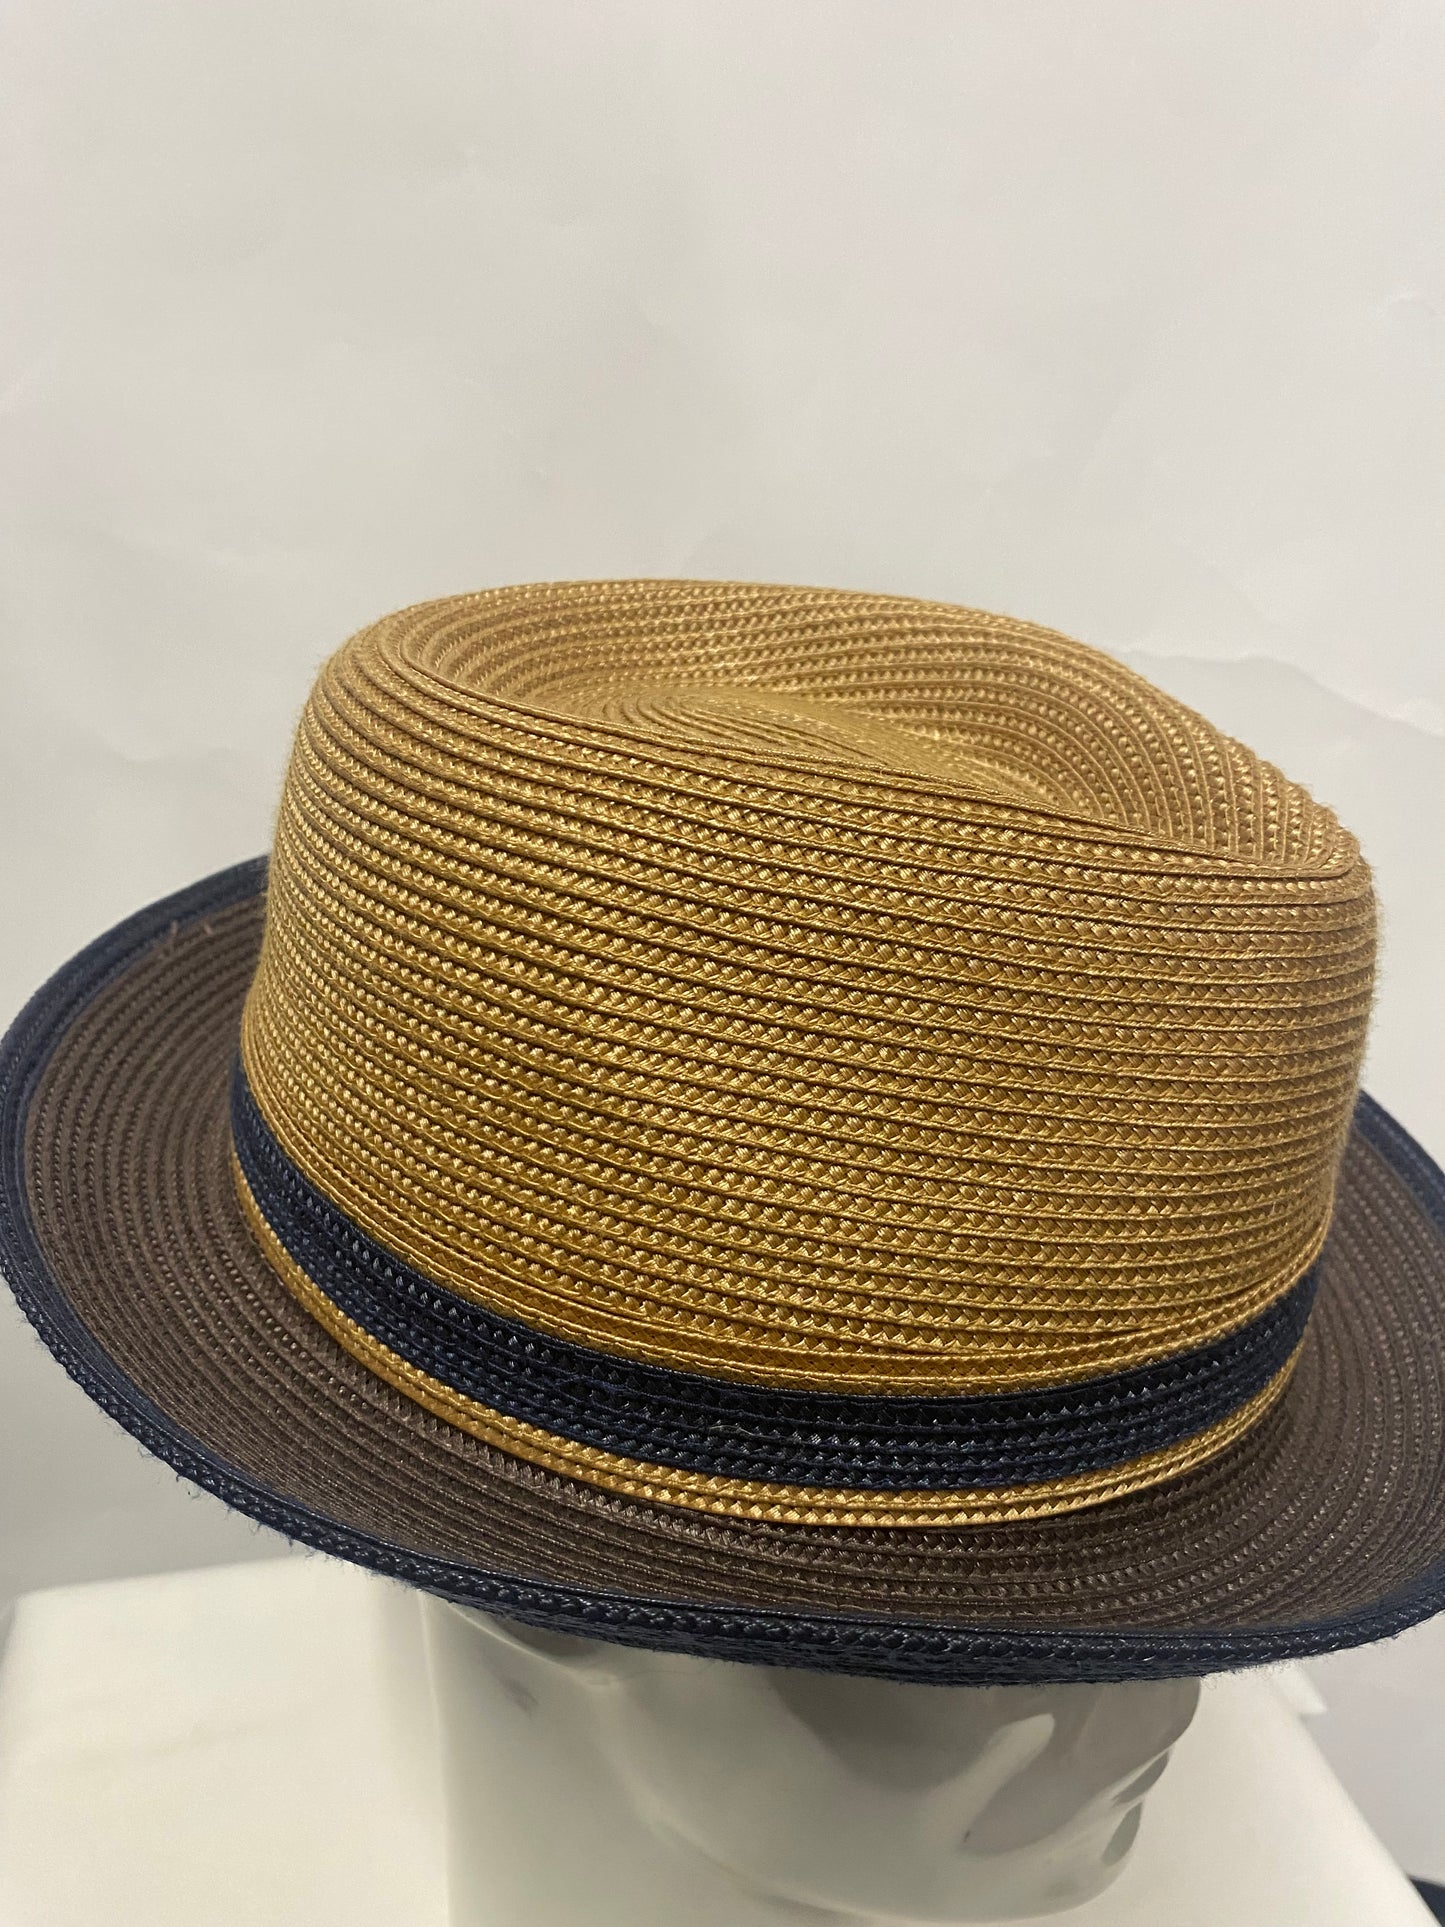 Dasmarca Men's Tan and Navy Straw Summer Hat